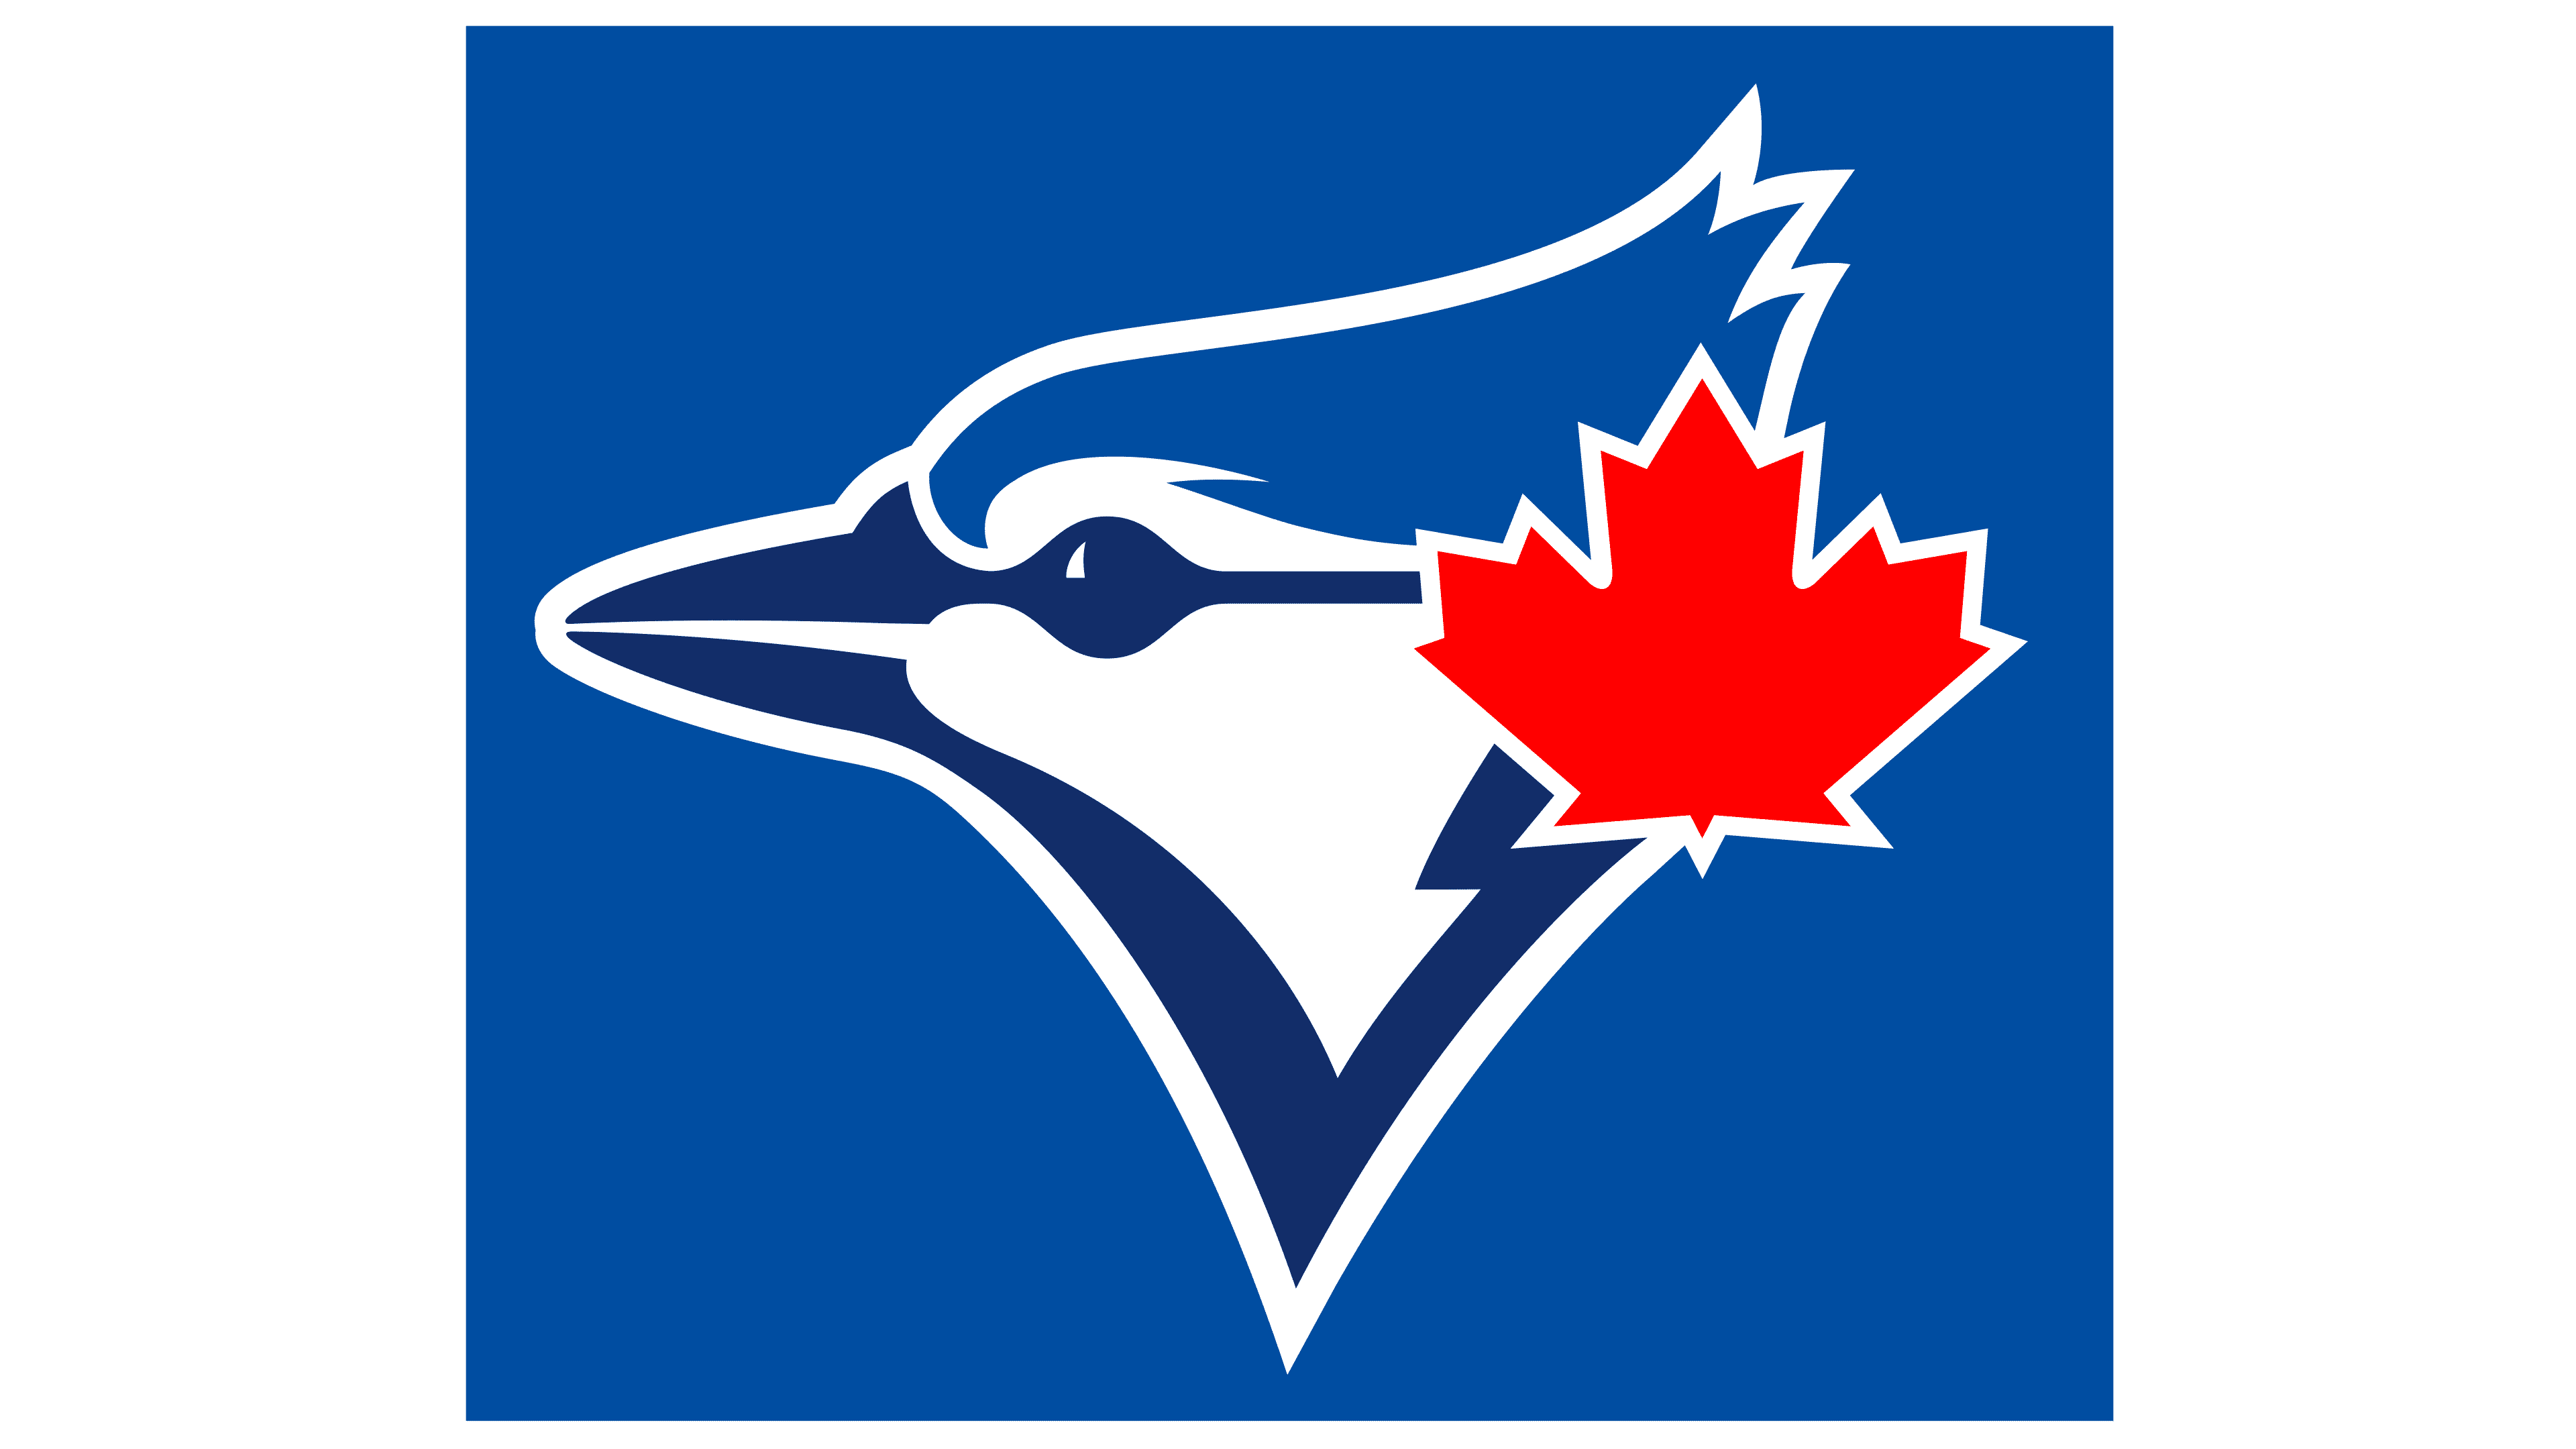 Colour palette of the Toronto Blue Jays.